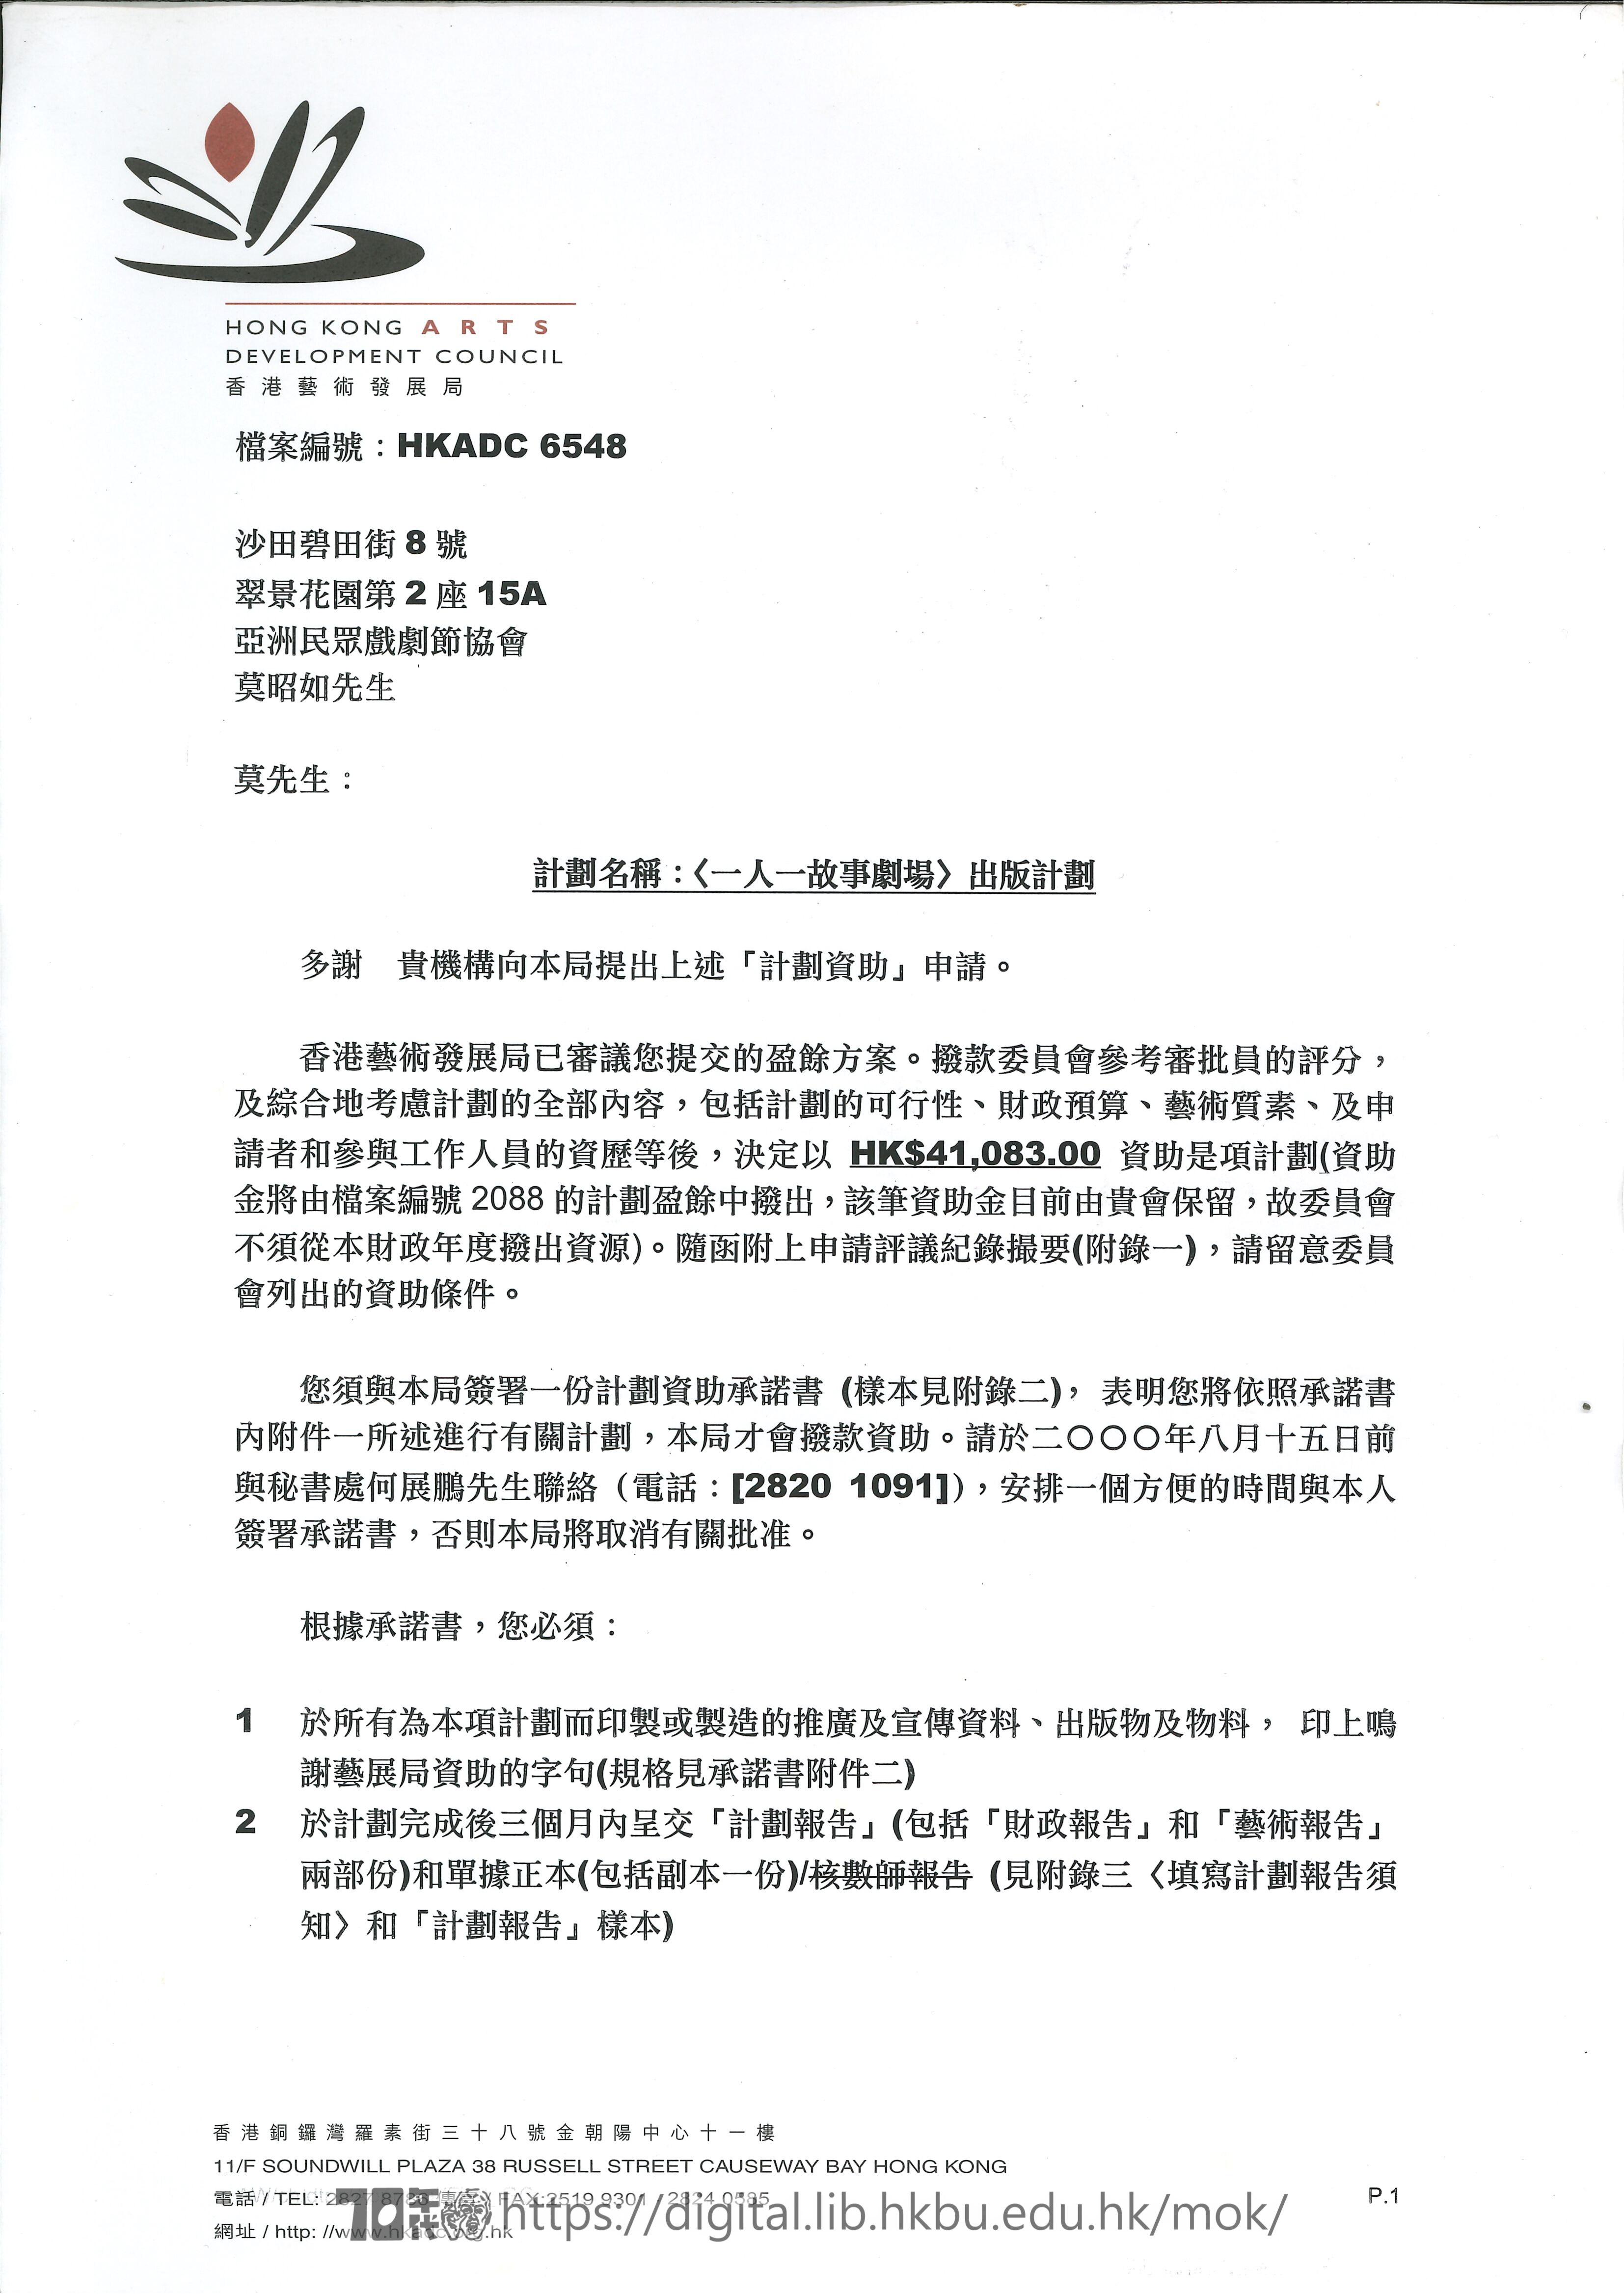 Community theatre  香港藝術發展局關於計劃資助申請的回復信函  